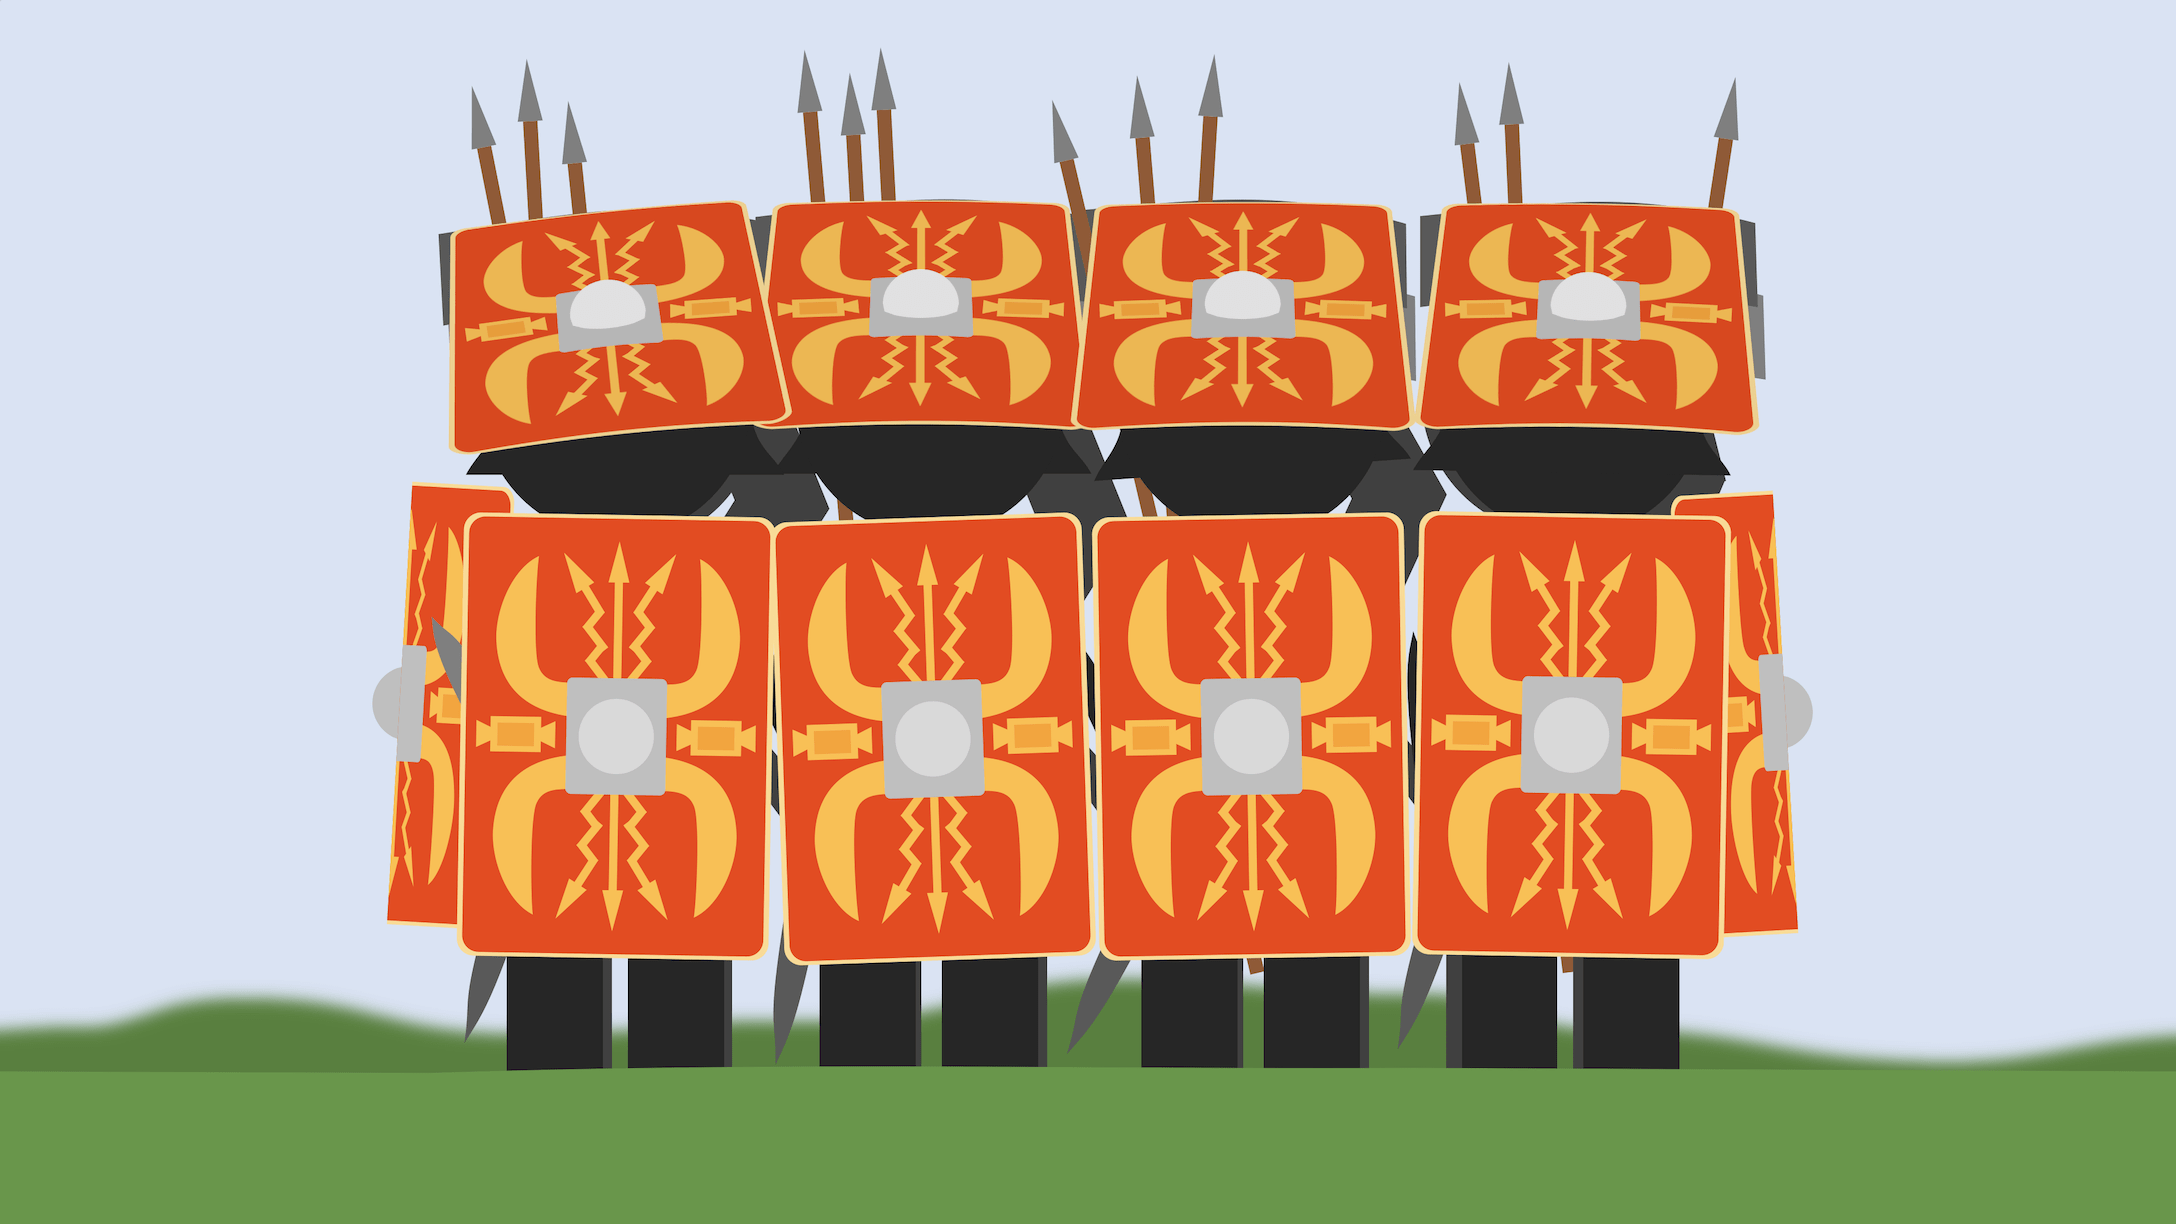 Roman legionaries in a tortoise formation